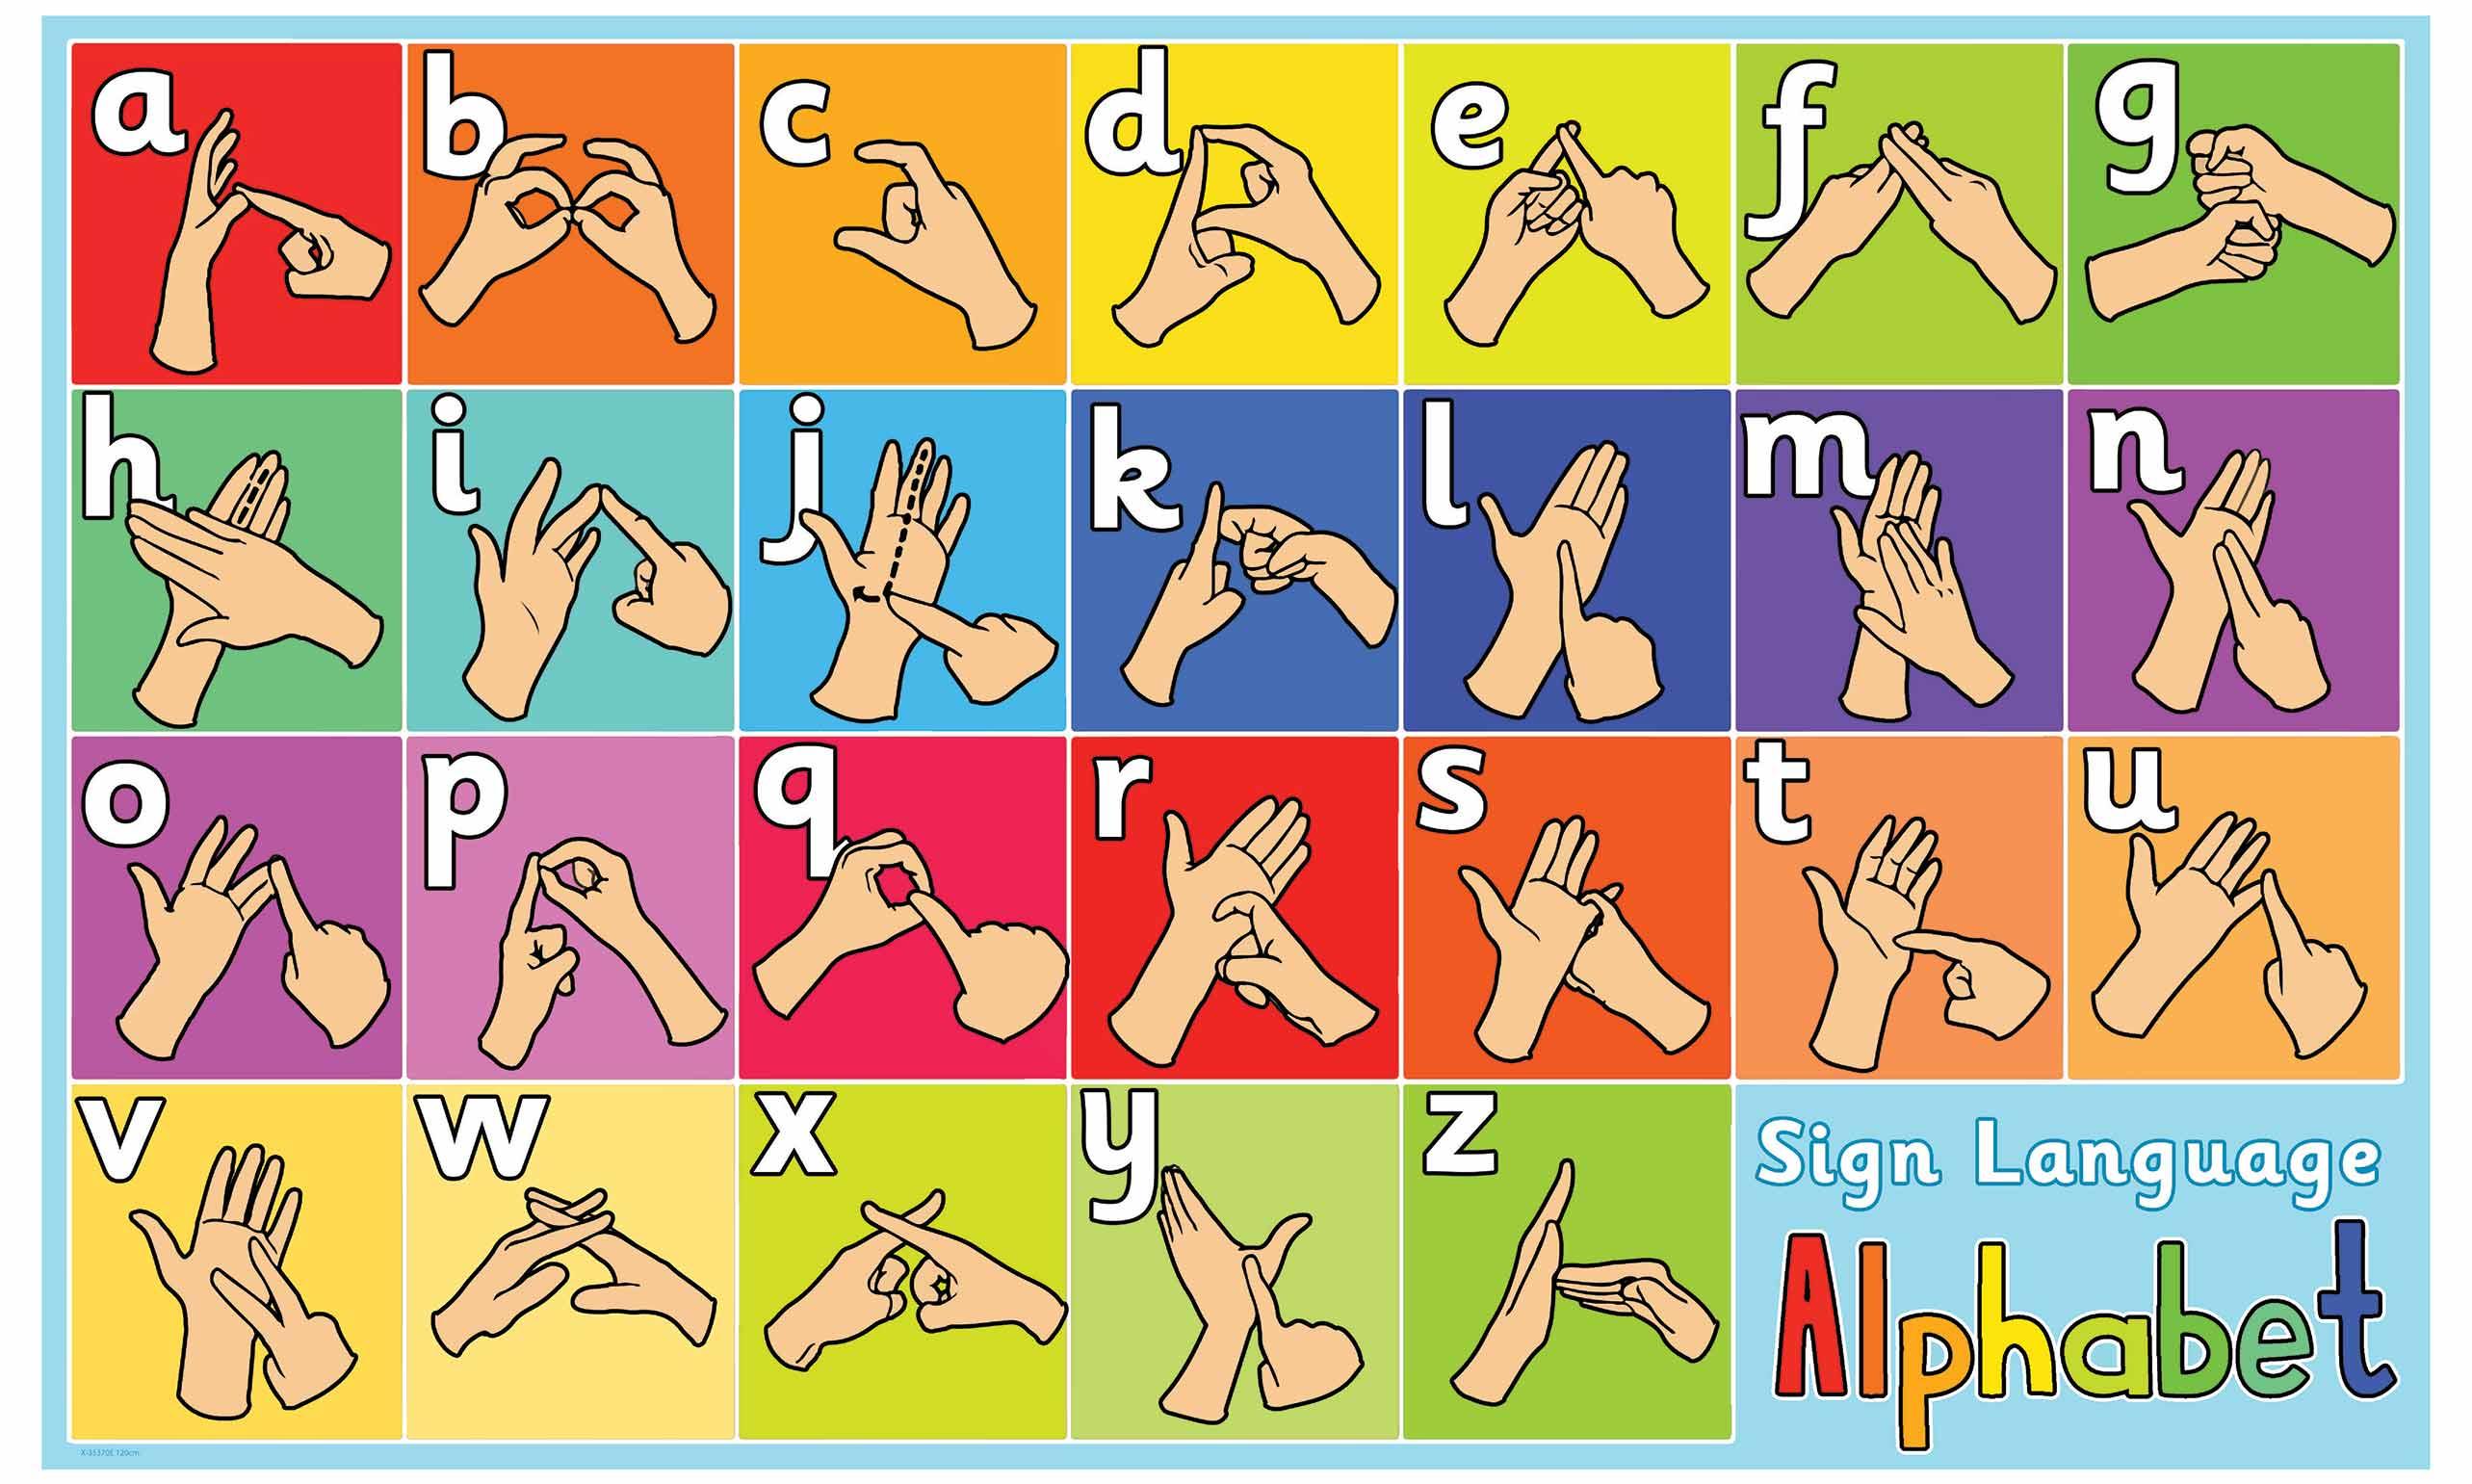 Sign Language Alphabet Cards Free